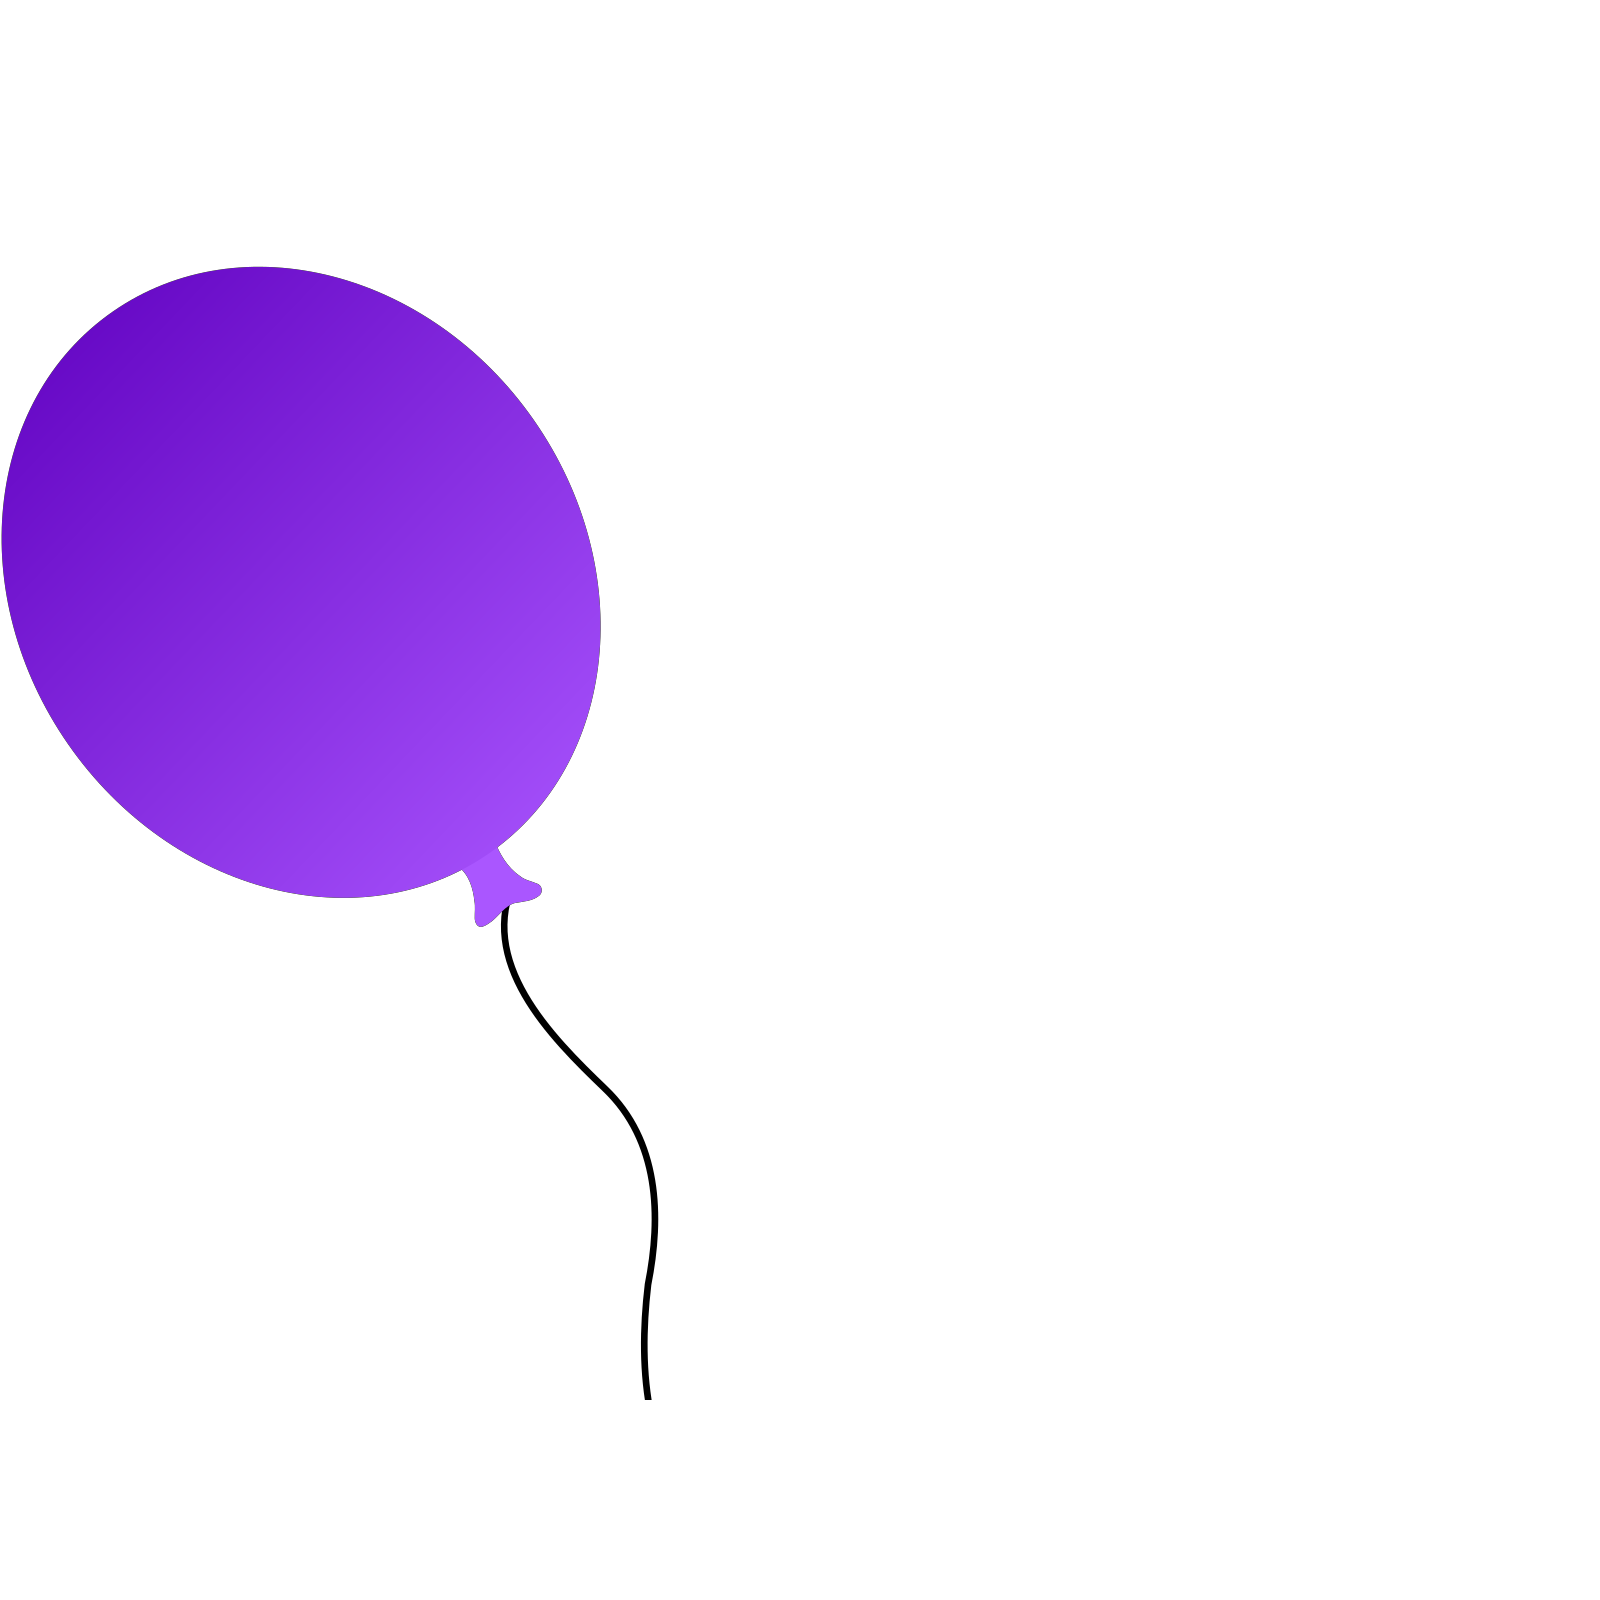 Latar belakang balon ungu PNG latar belakang